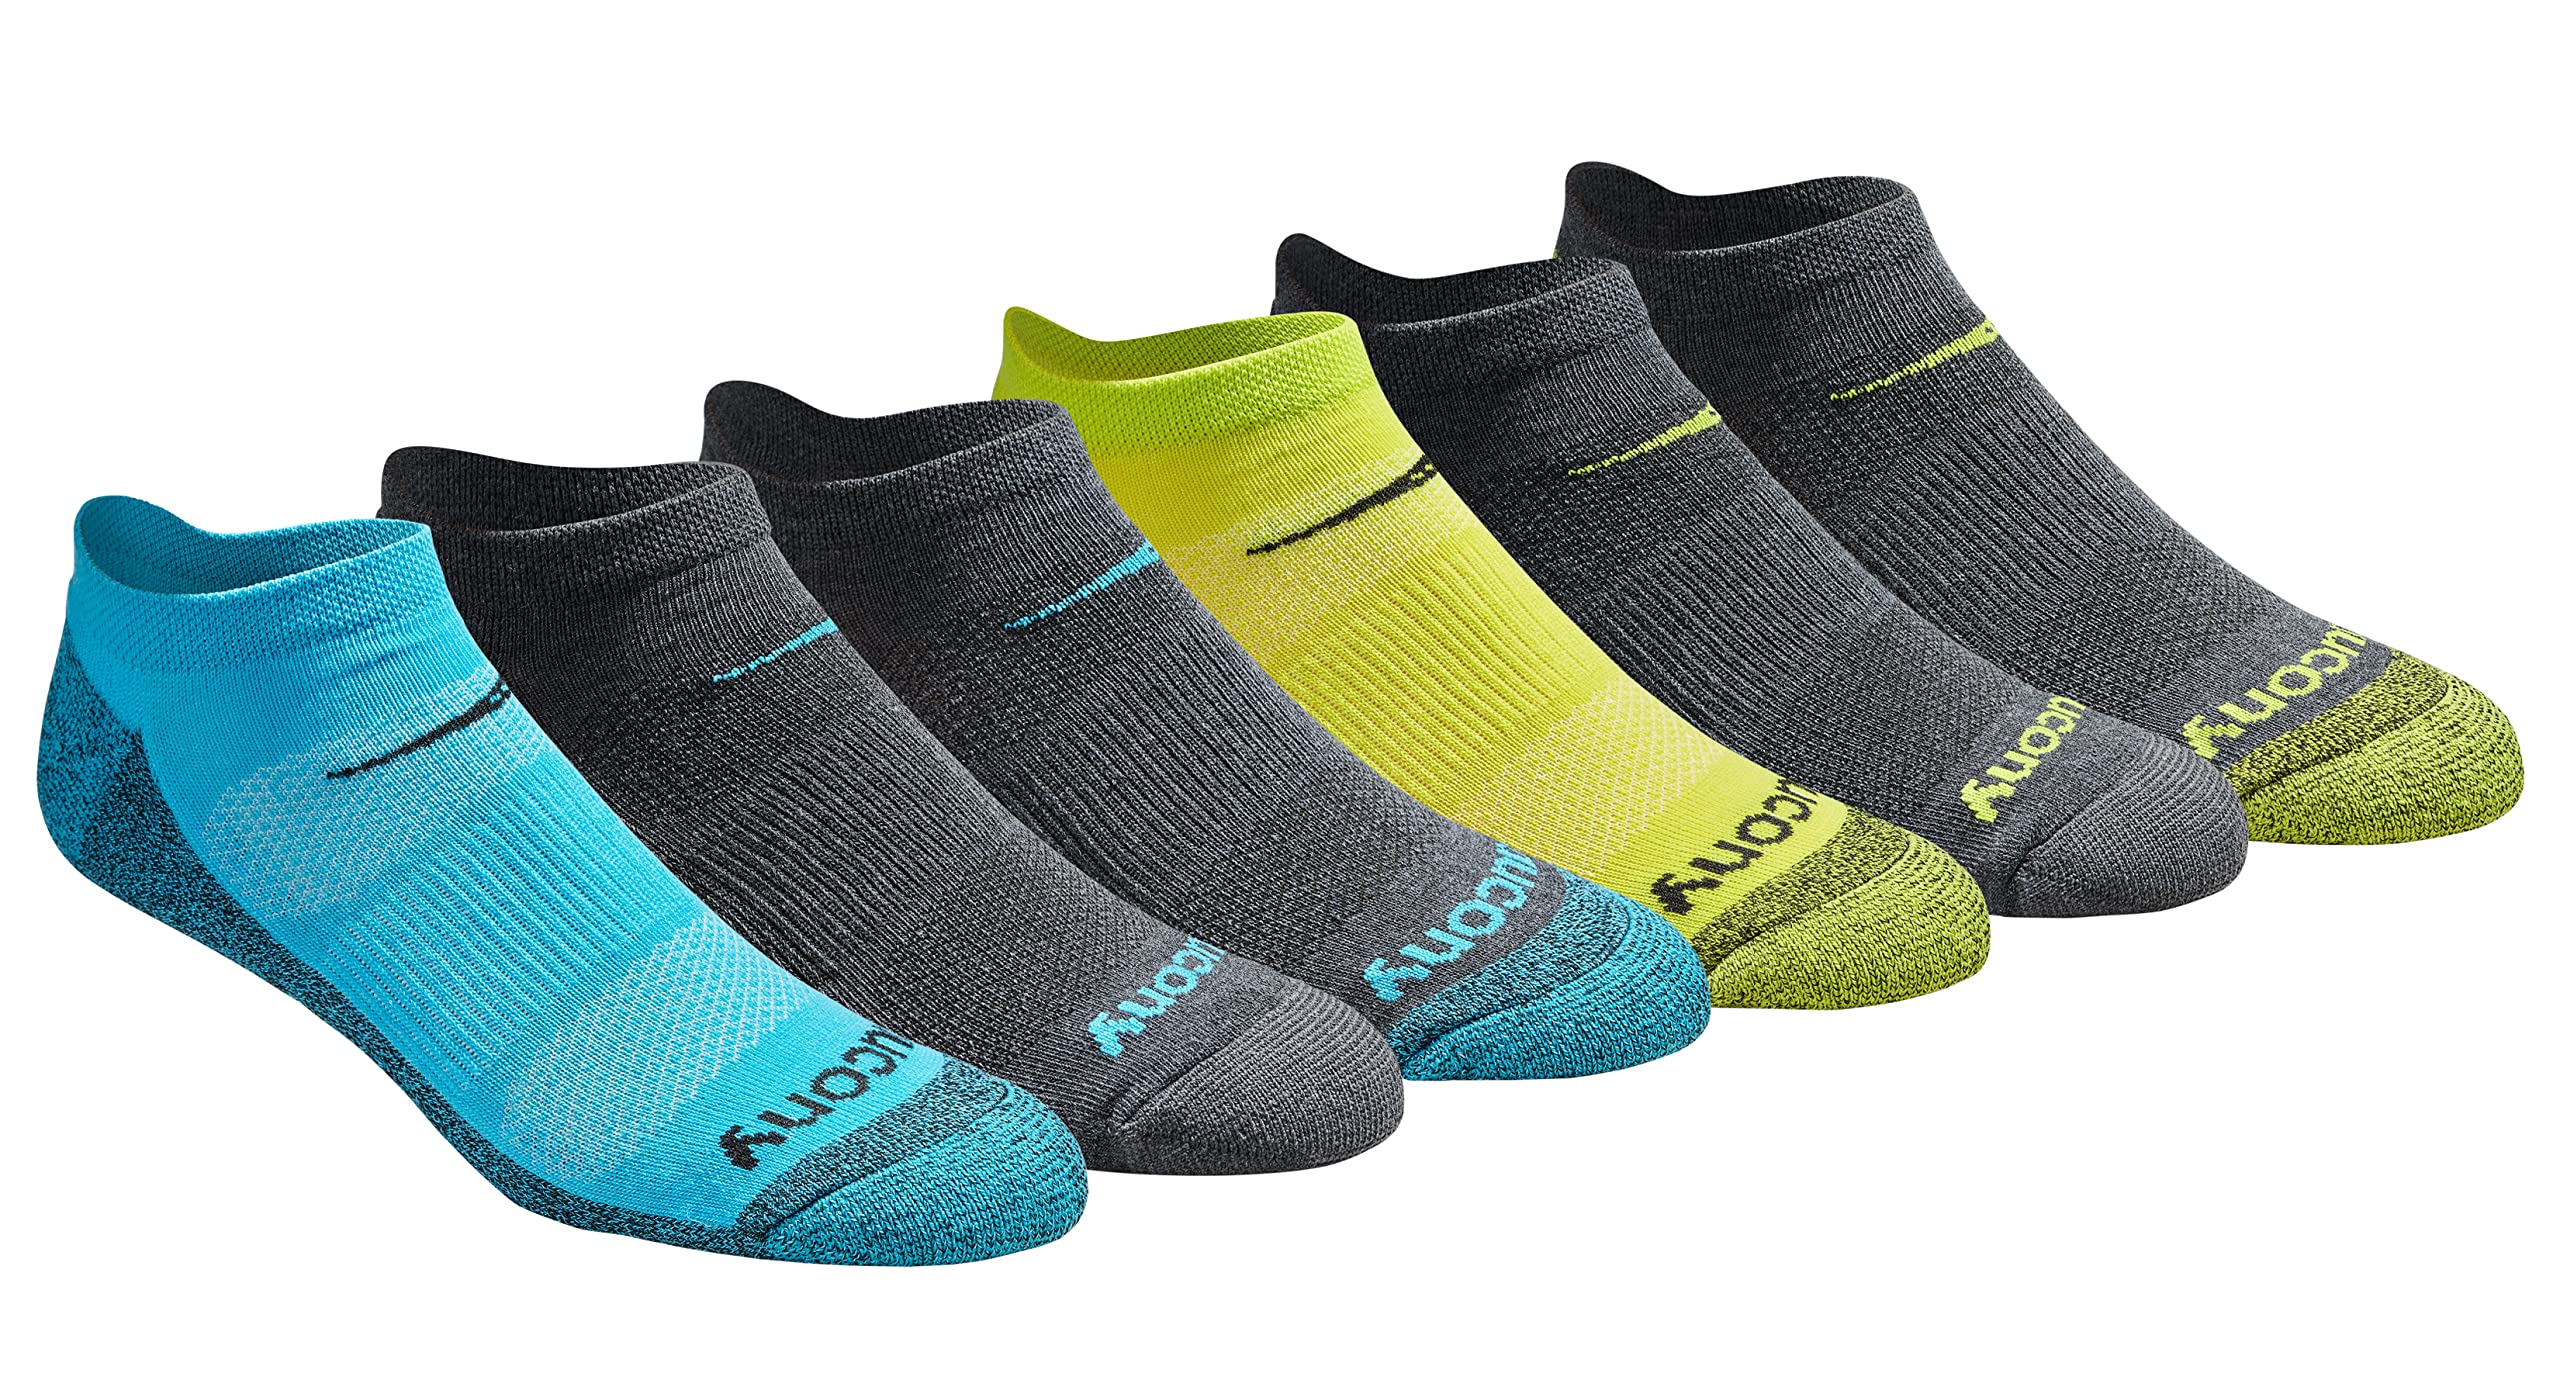 Saucony Men's Multi-Pack Mesh Ventilating Comfort Fit Performance No-Show Socks